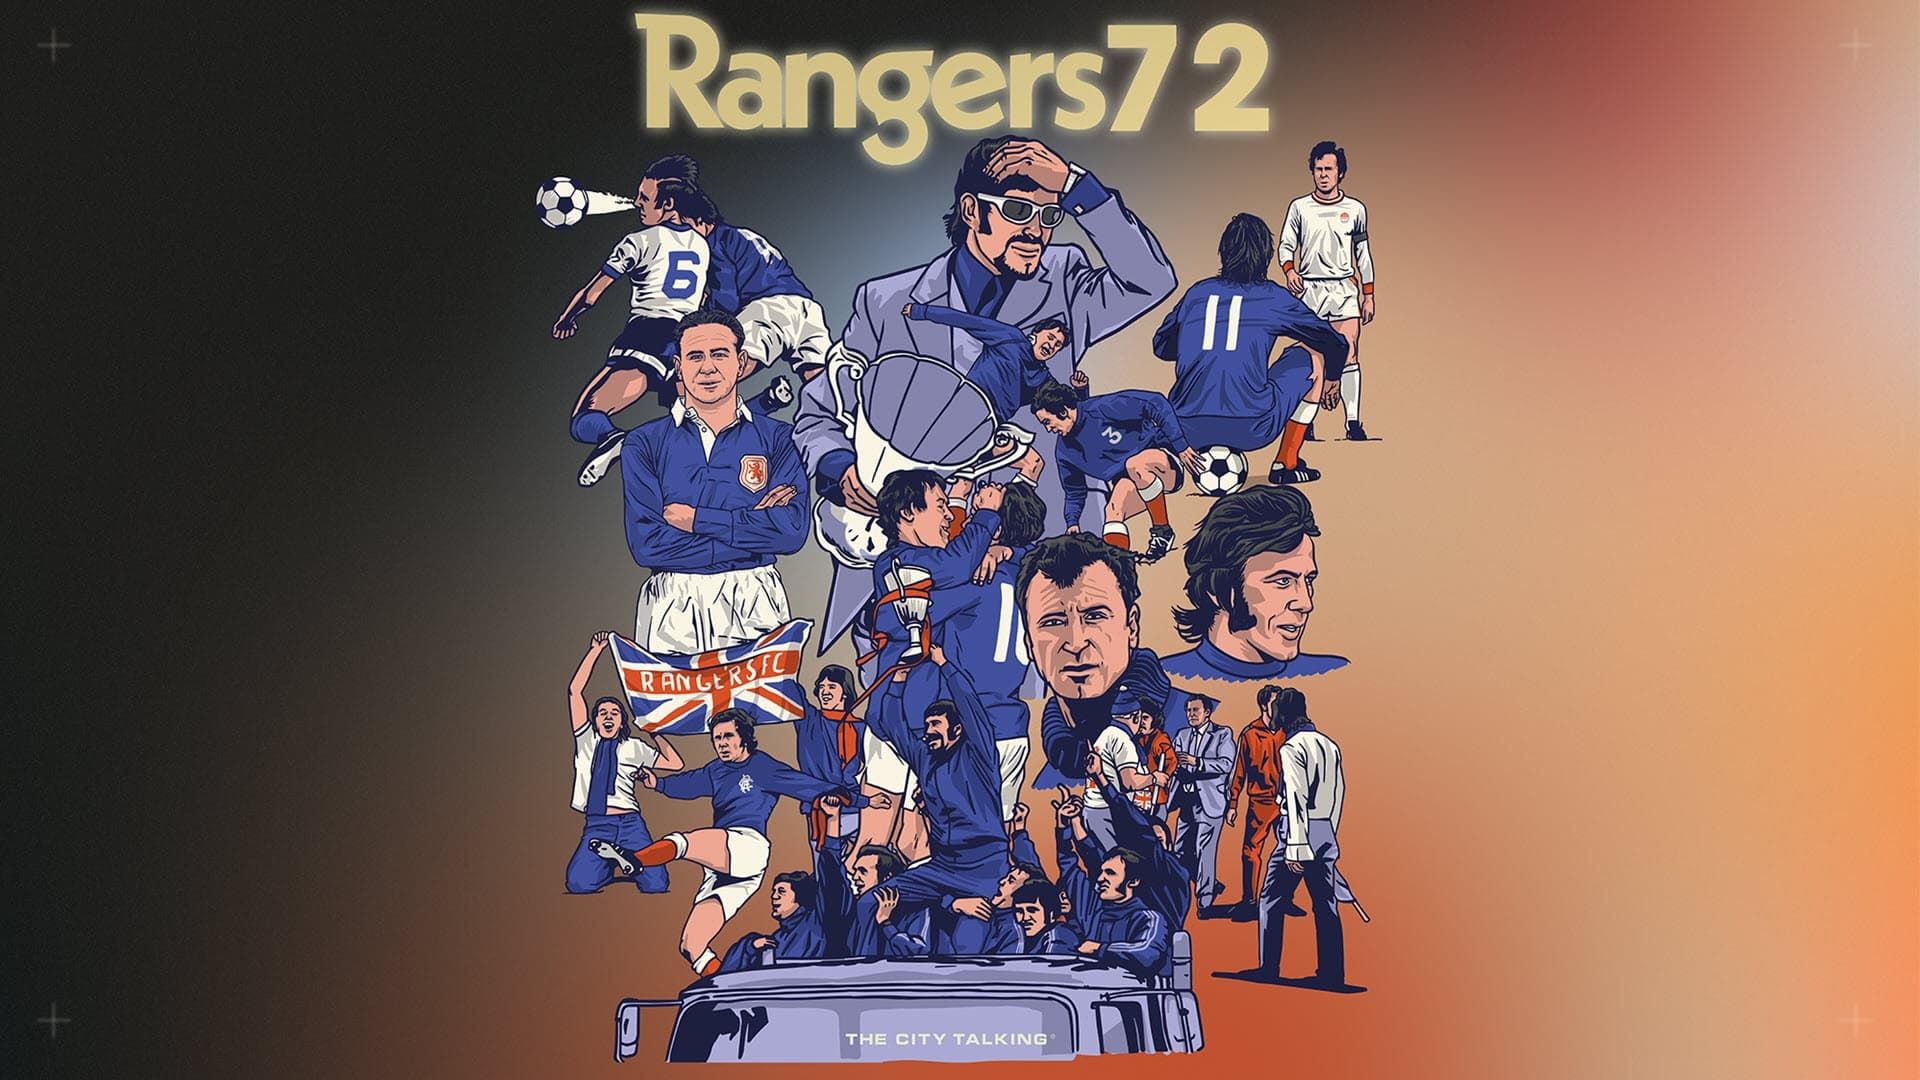 Rangers72 background